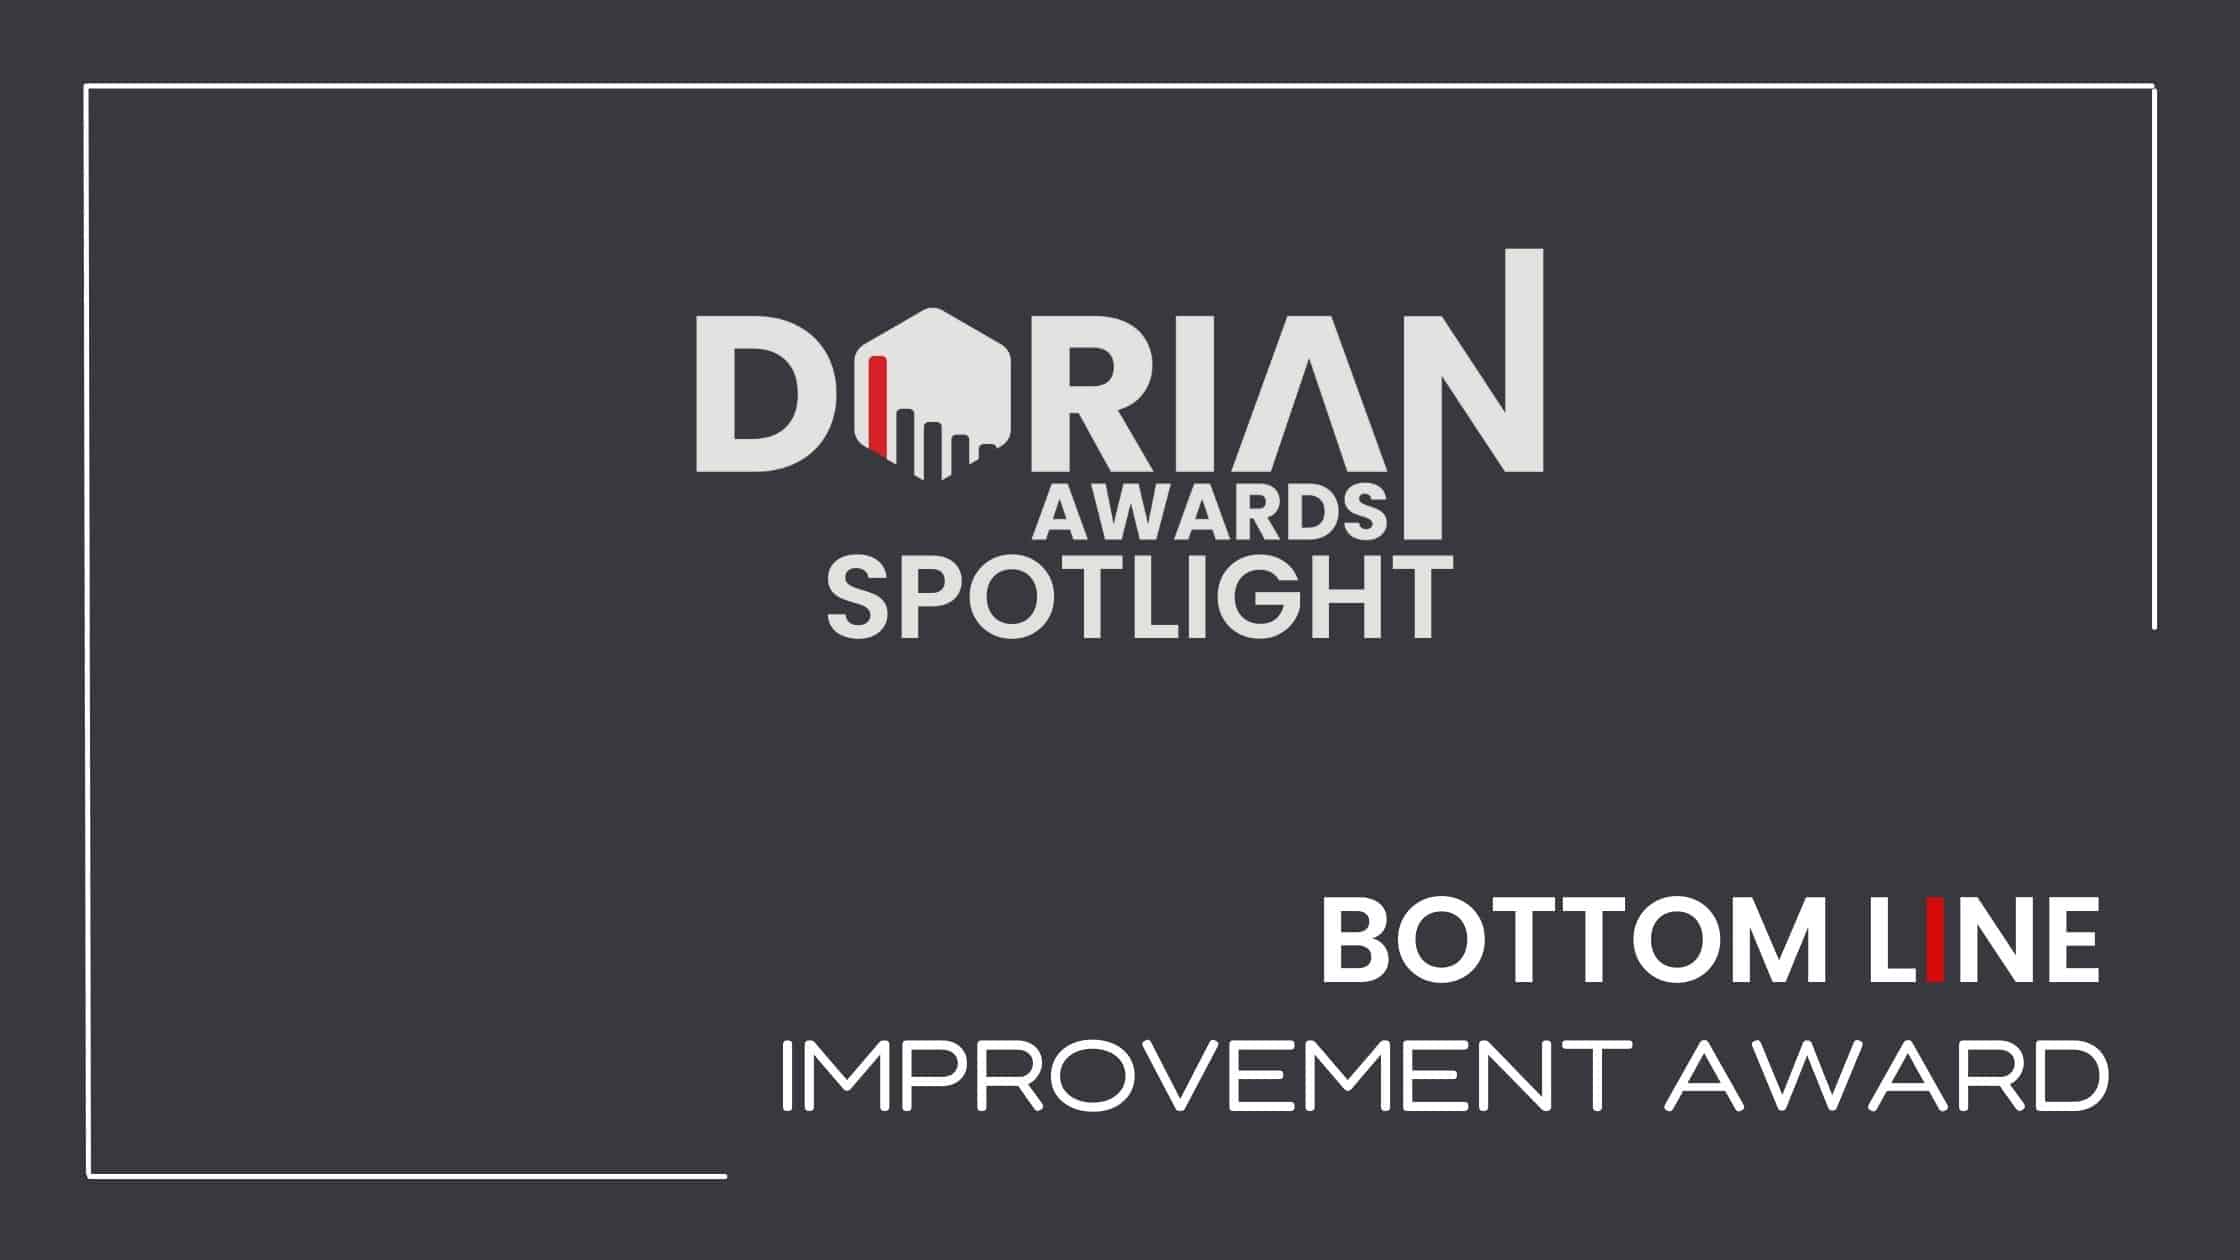 Dorian Awards Bottom Line Improvement Award Header on a grey background